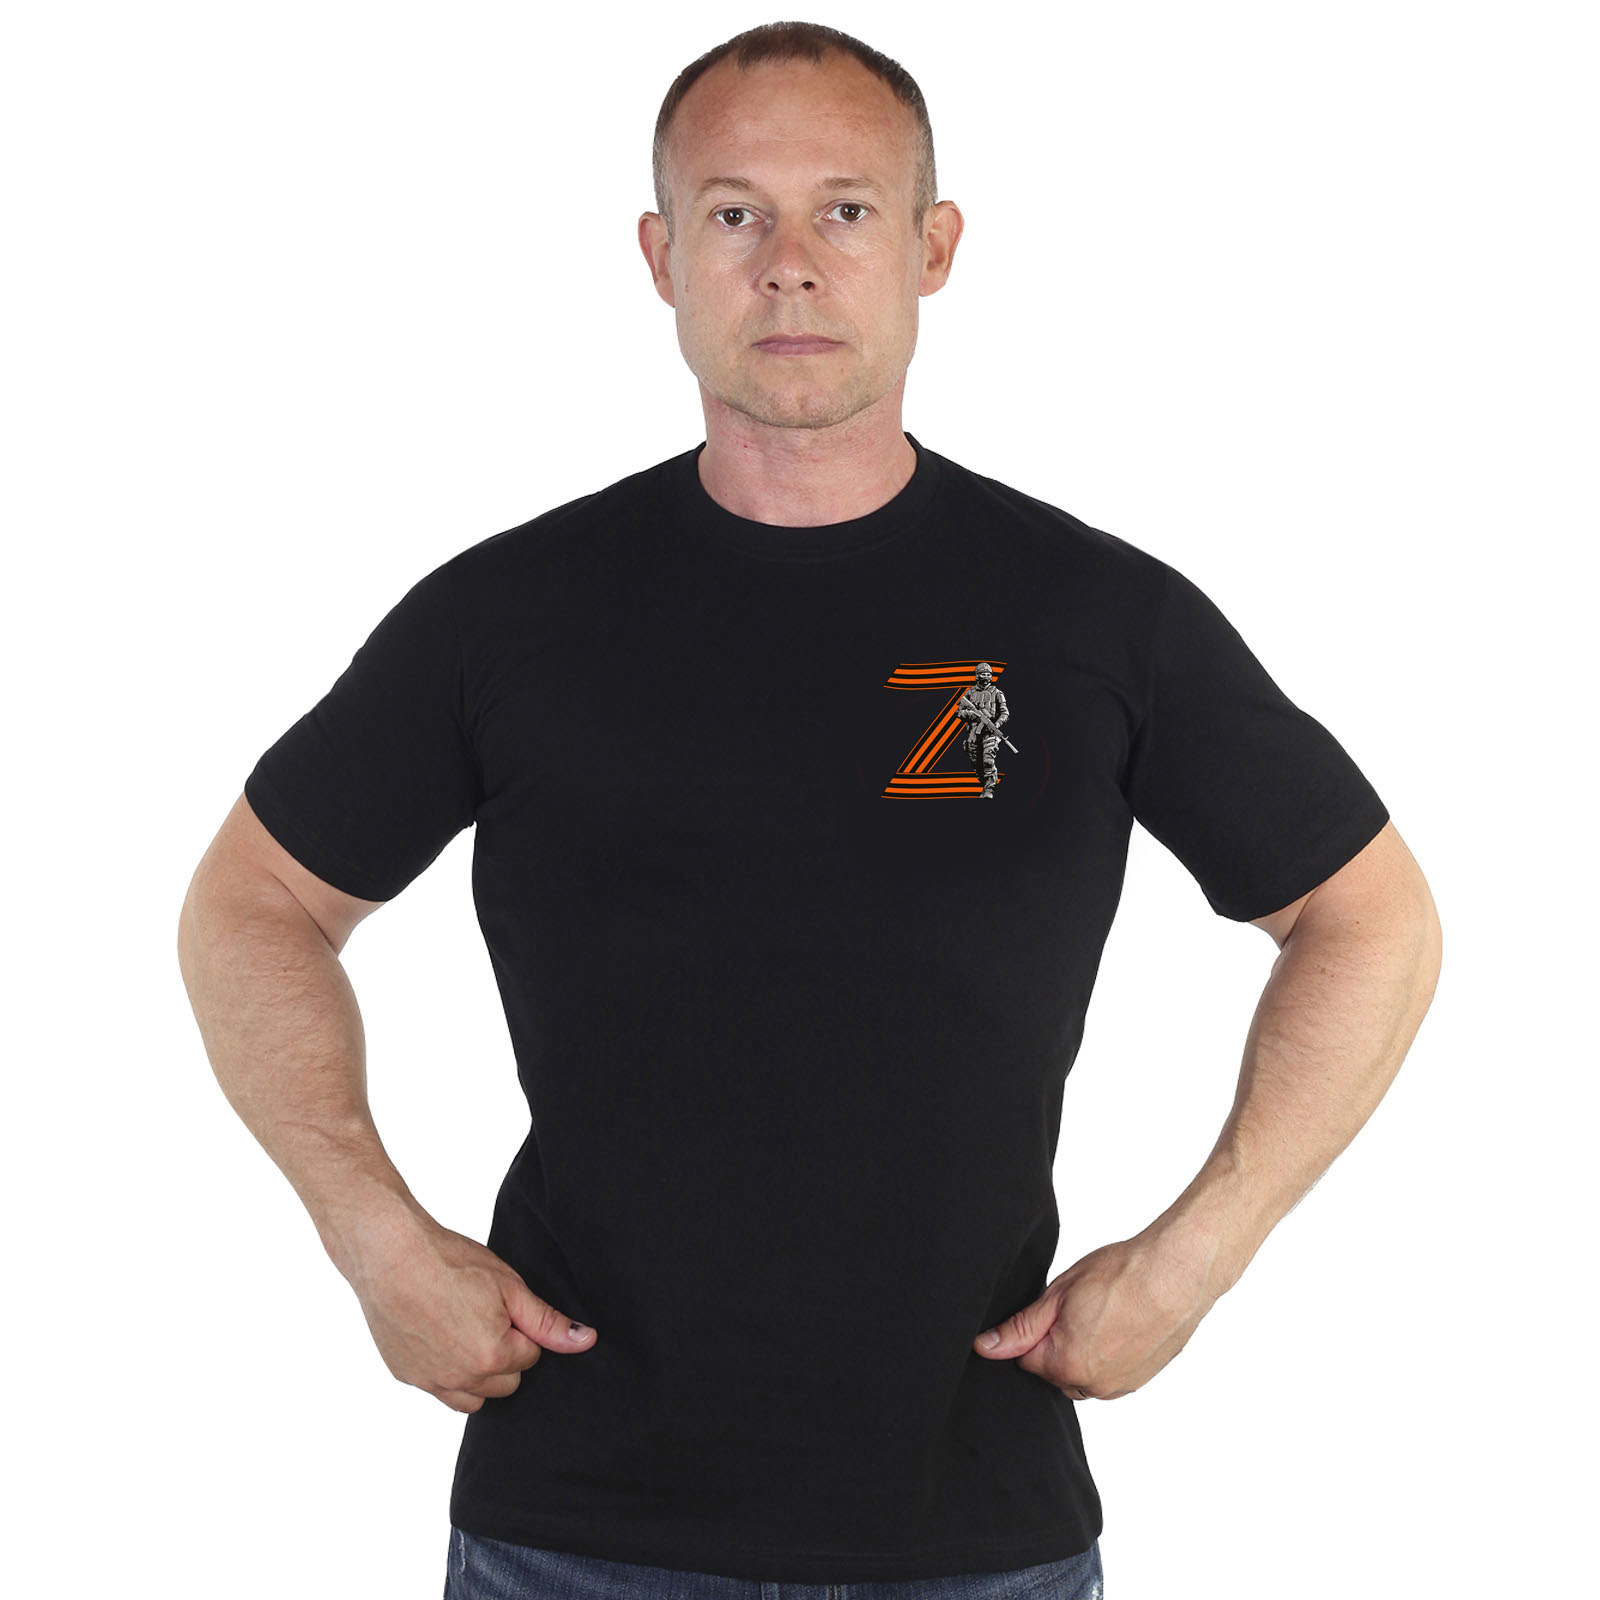 Стильная мужская футболка Z